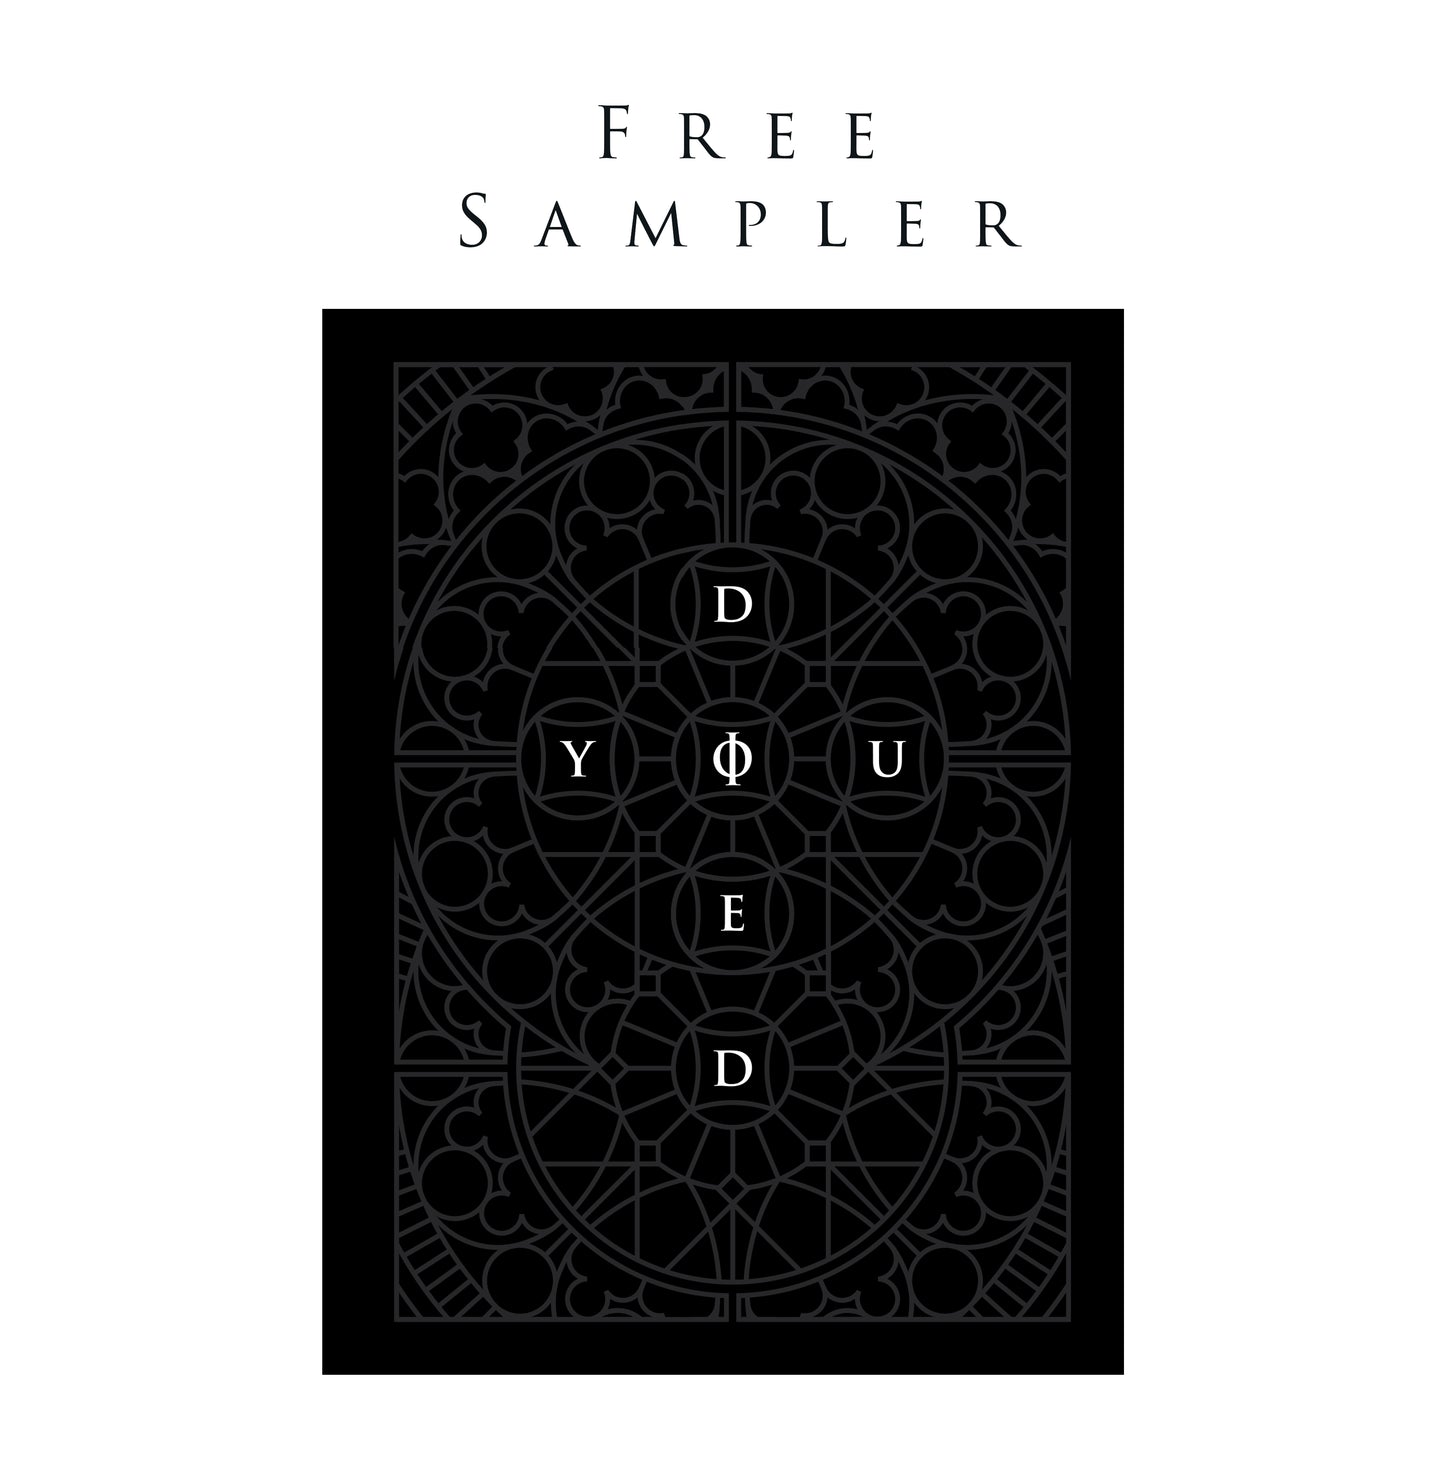 You Died (free digital sampler)